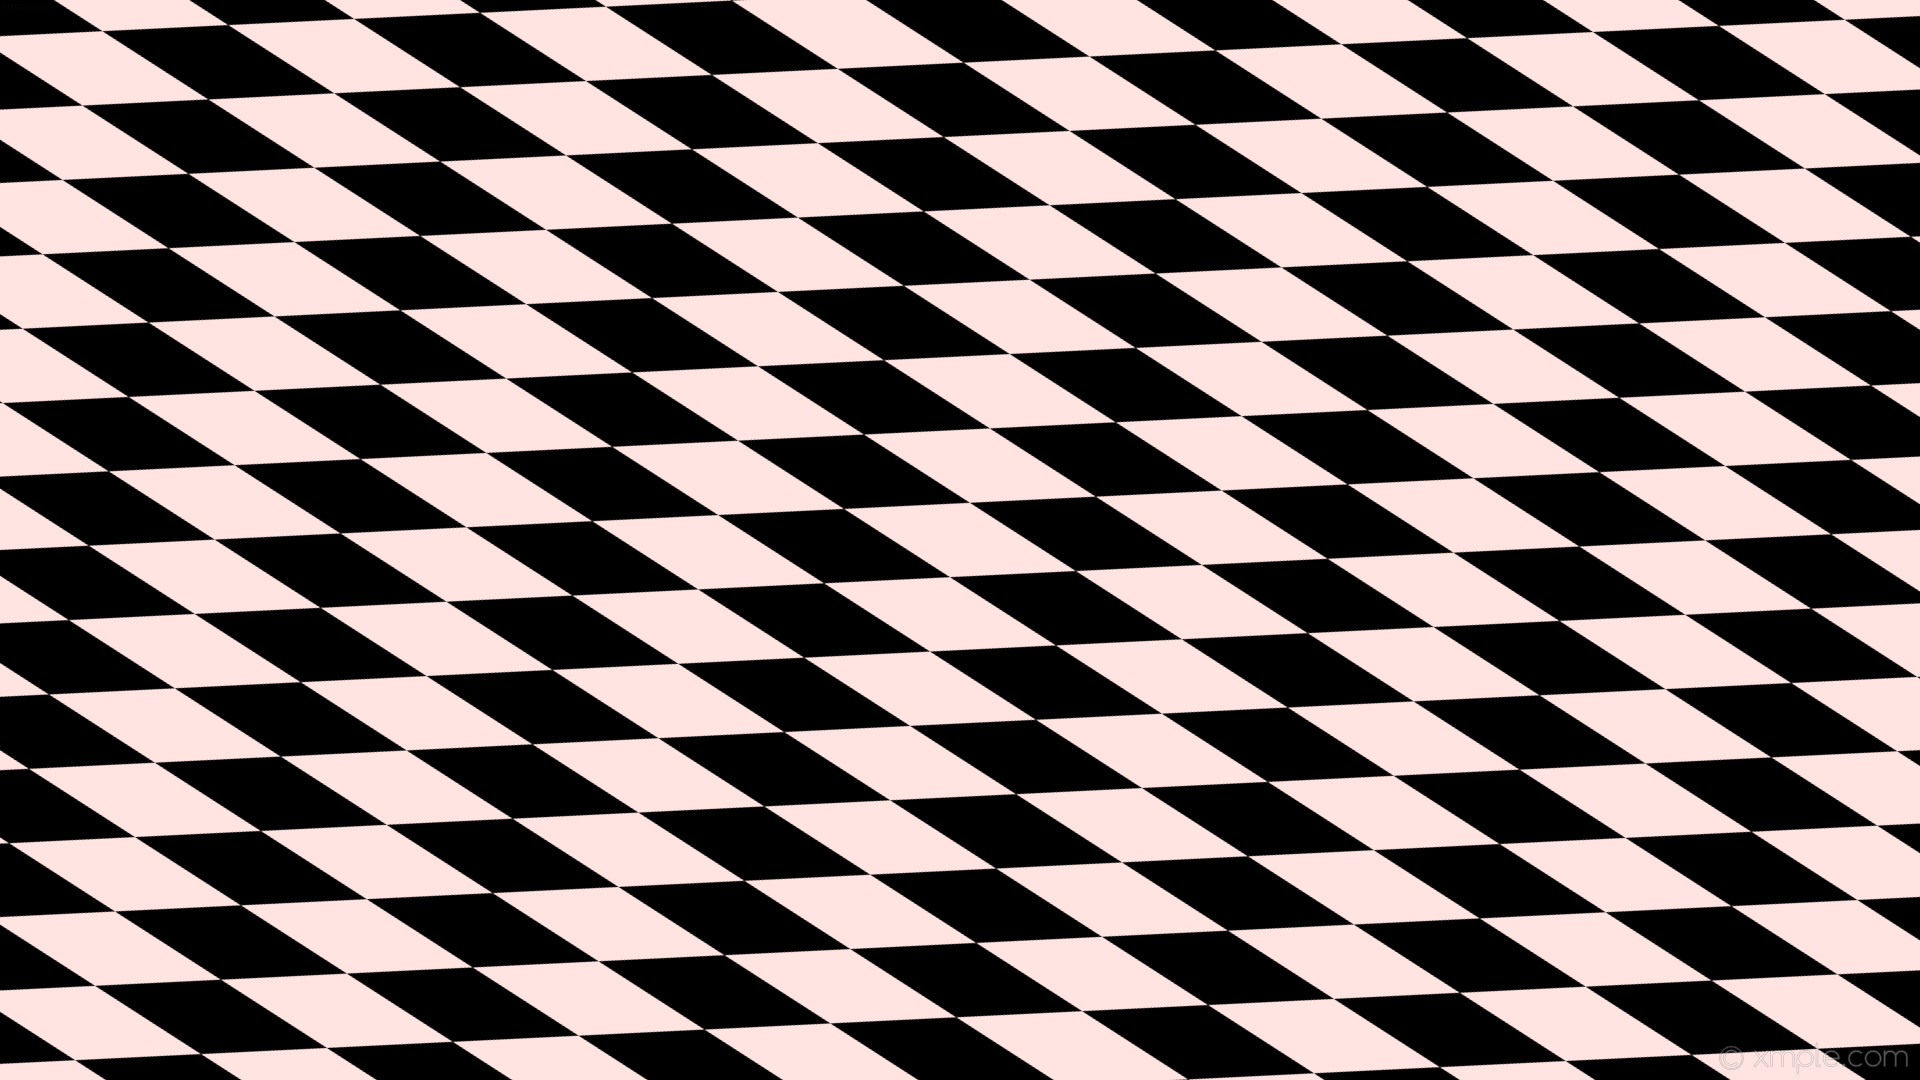 1920x1080 wallpaper diamond white lozenge black rhombus misty rose #ffe4e1 #000000  165Â° 240px 77px